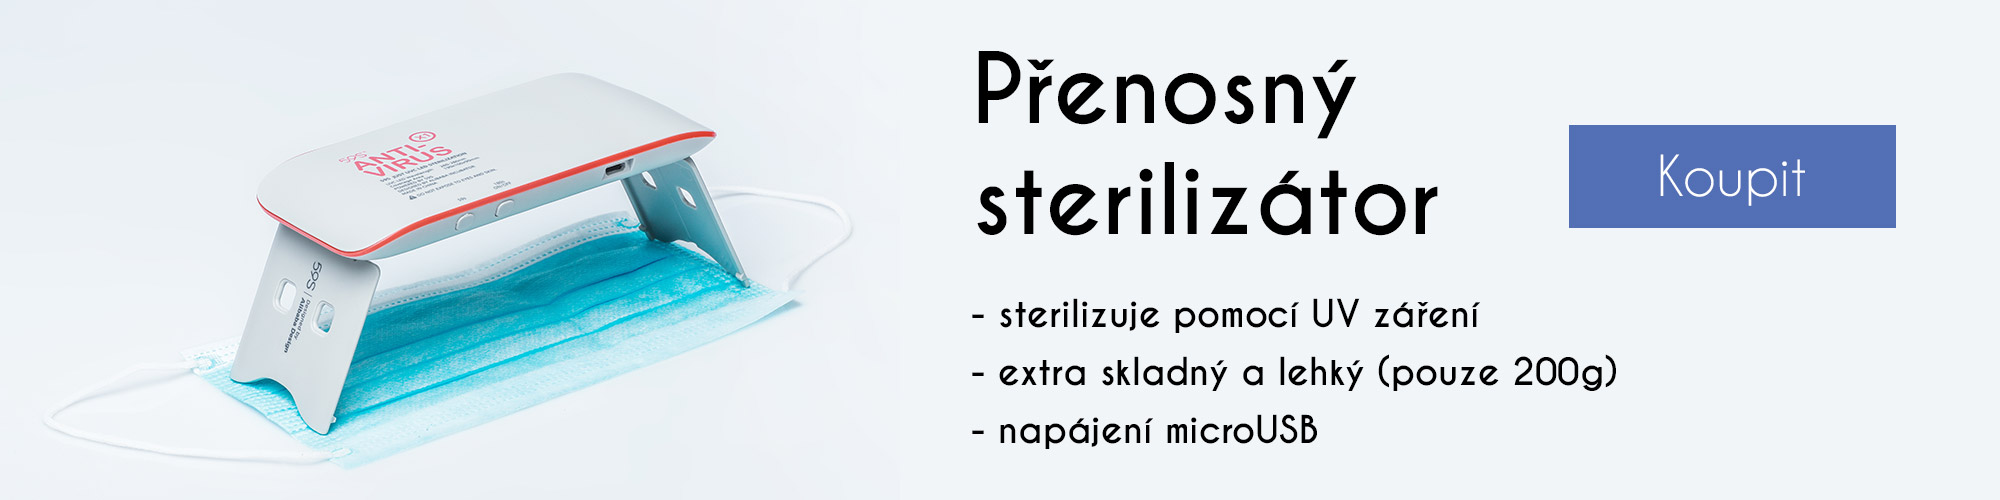 sterilizator-banner-full-screen-B1878